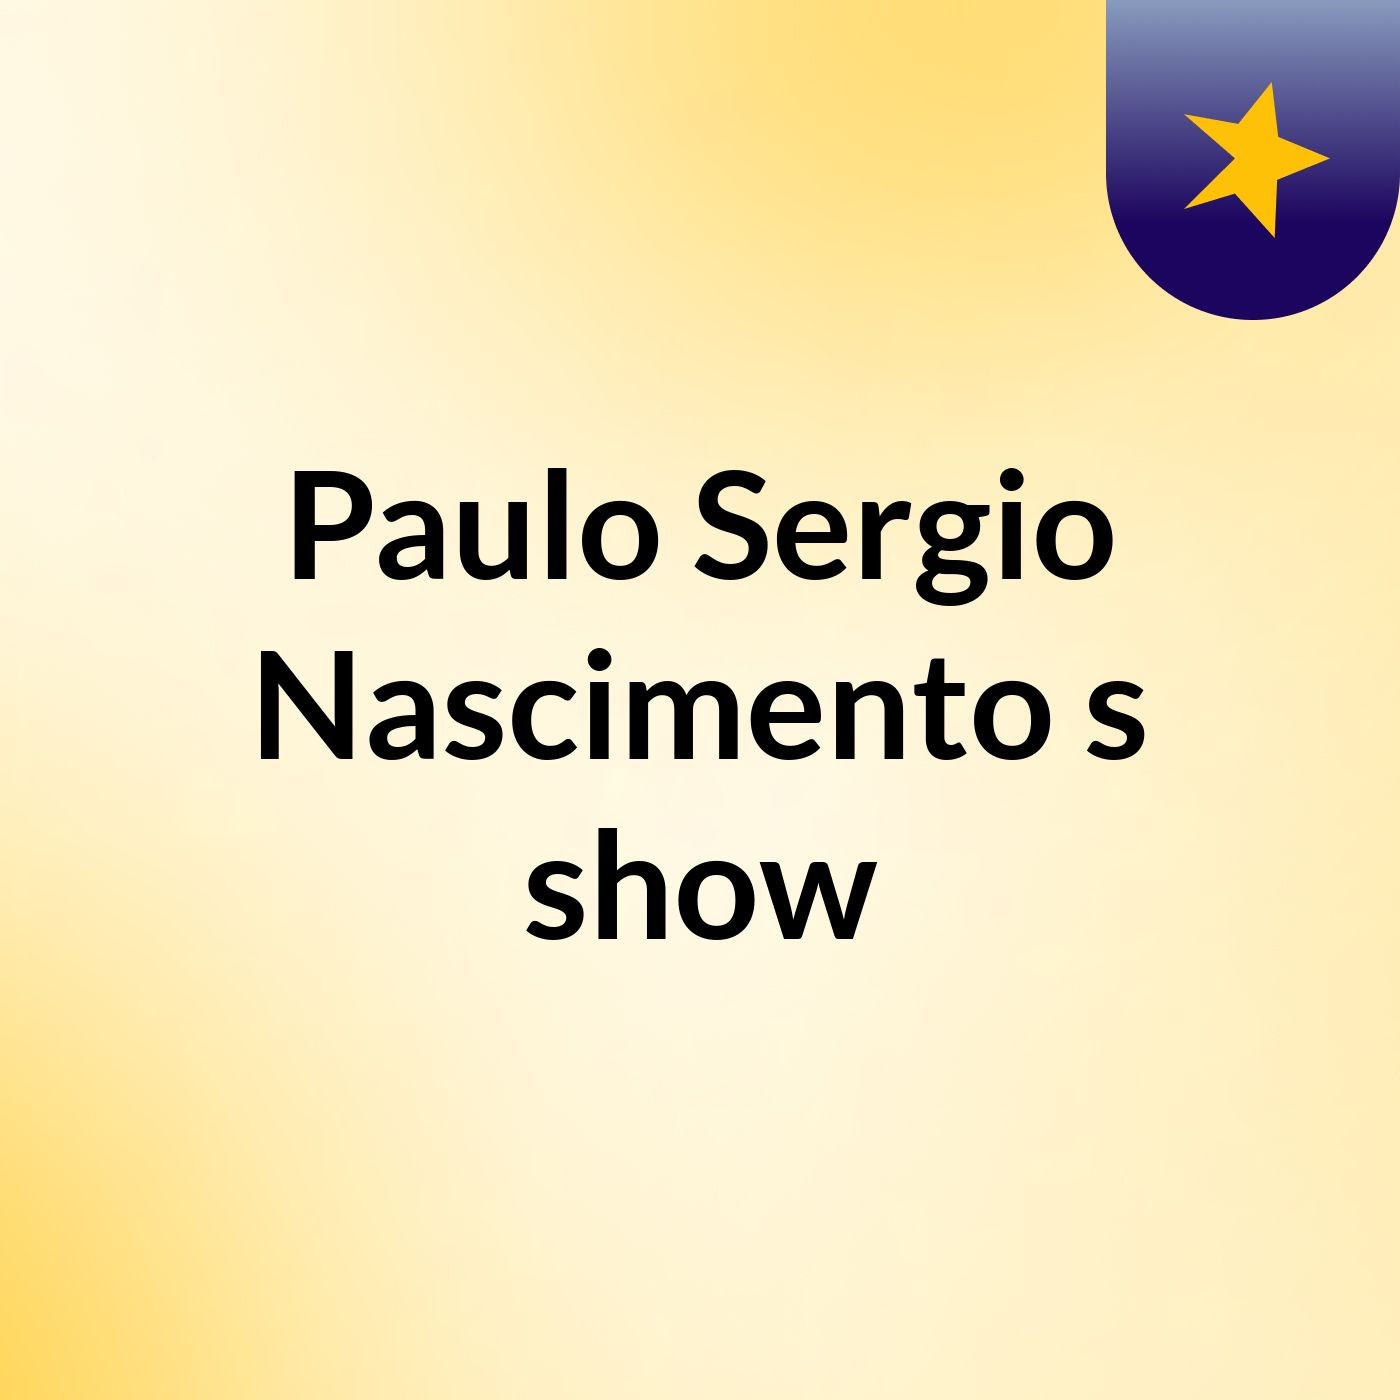 Paulo Sergio Nascimento's show